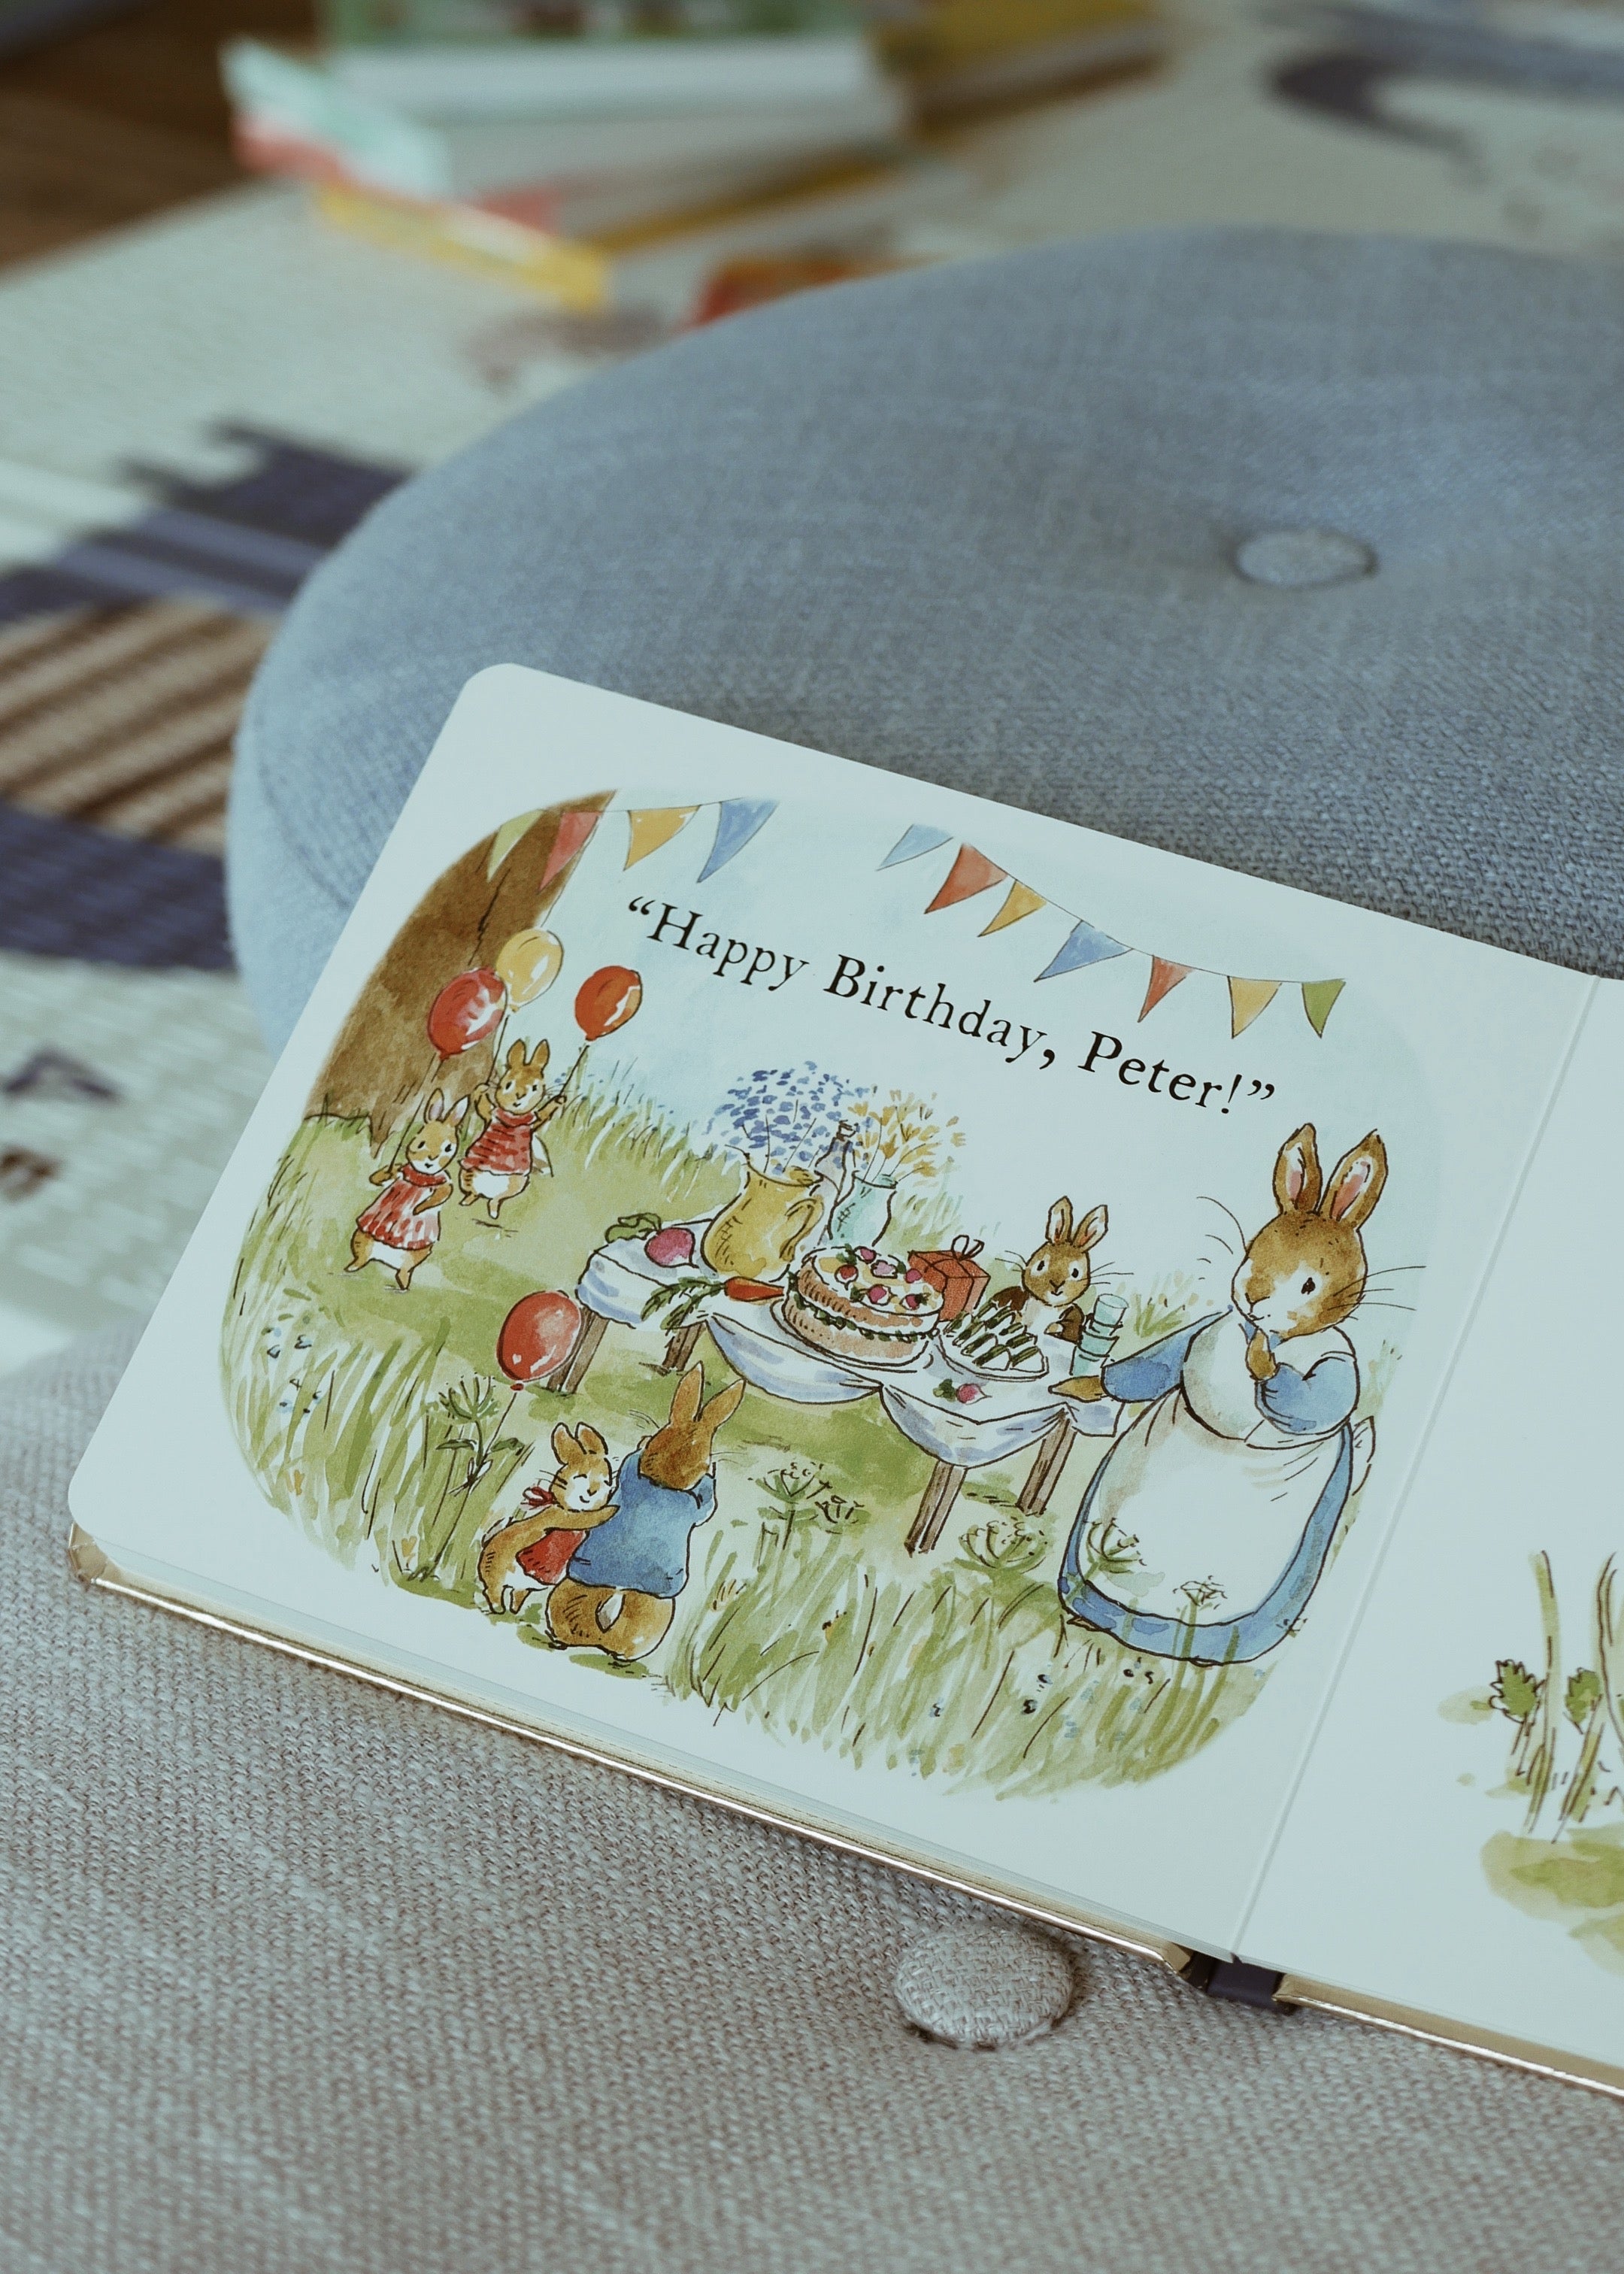 Peter Rabbit Tales- Happy Birthday!